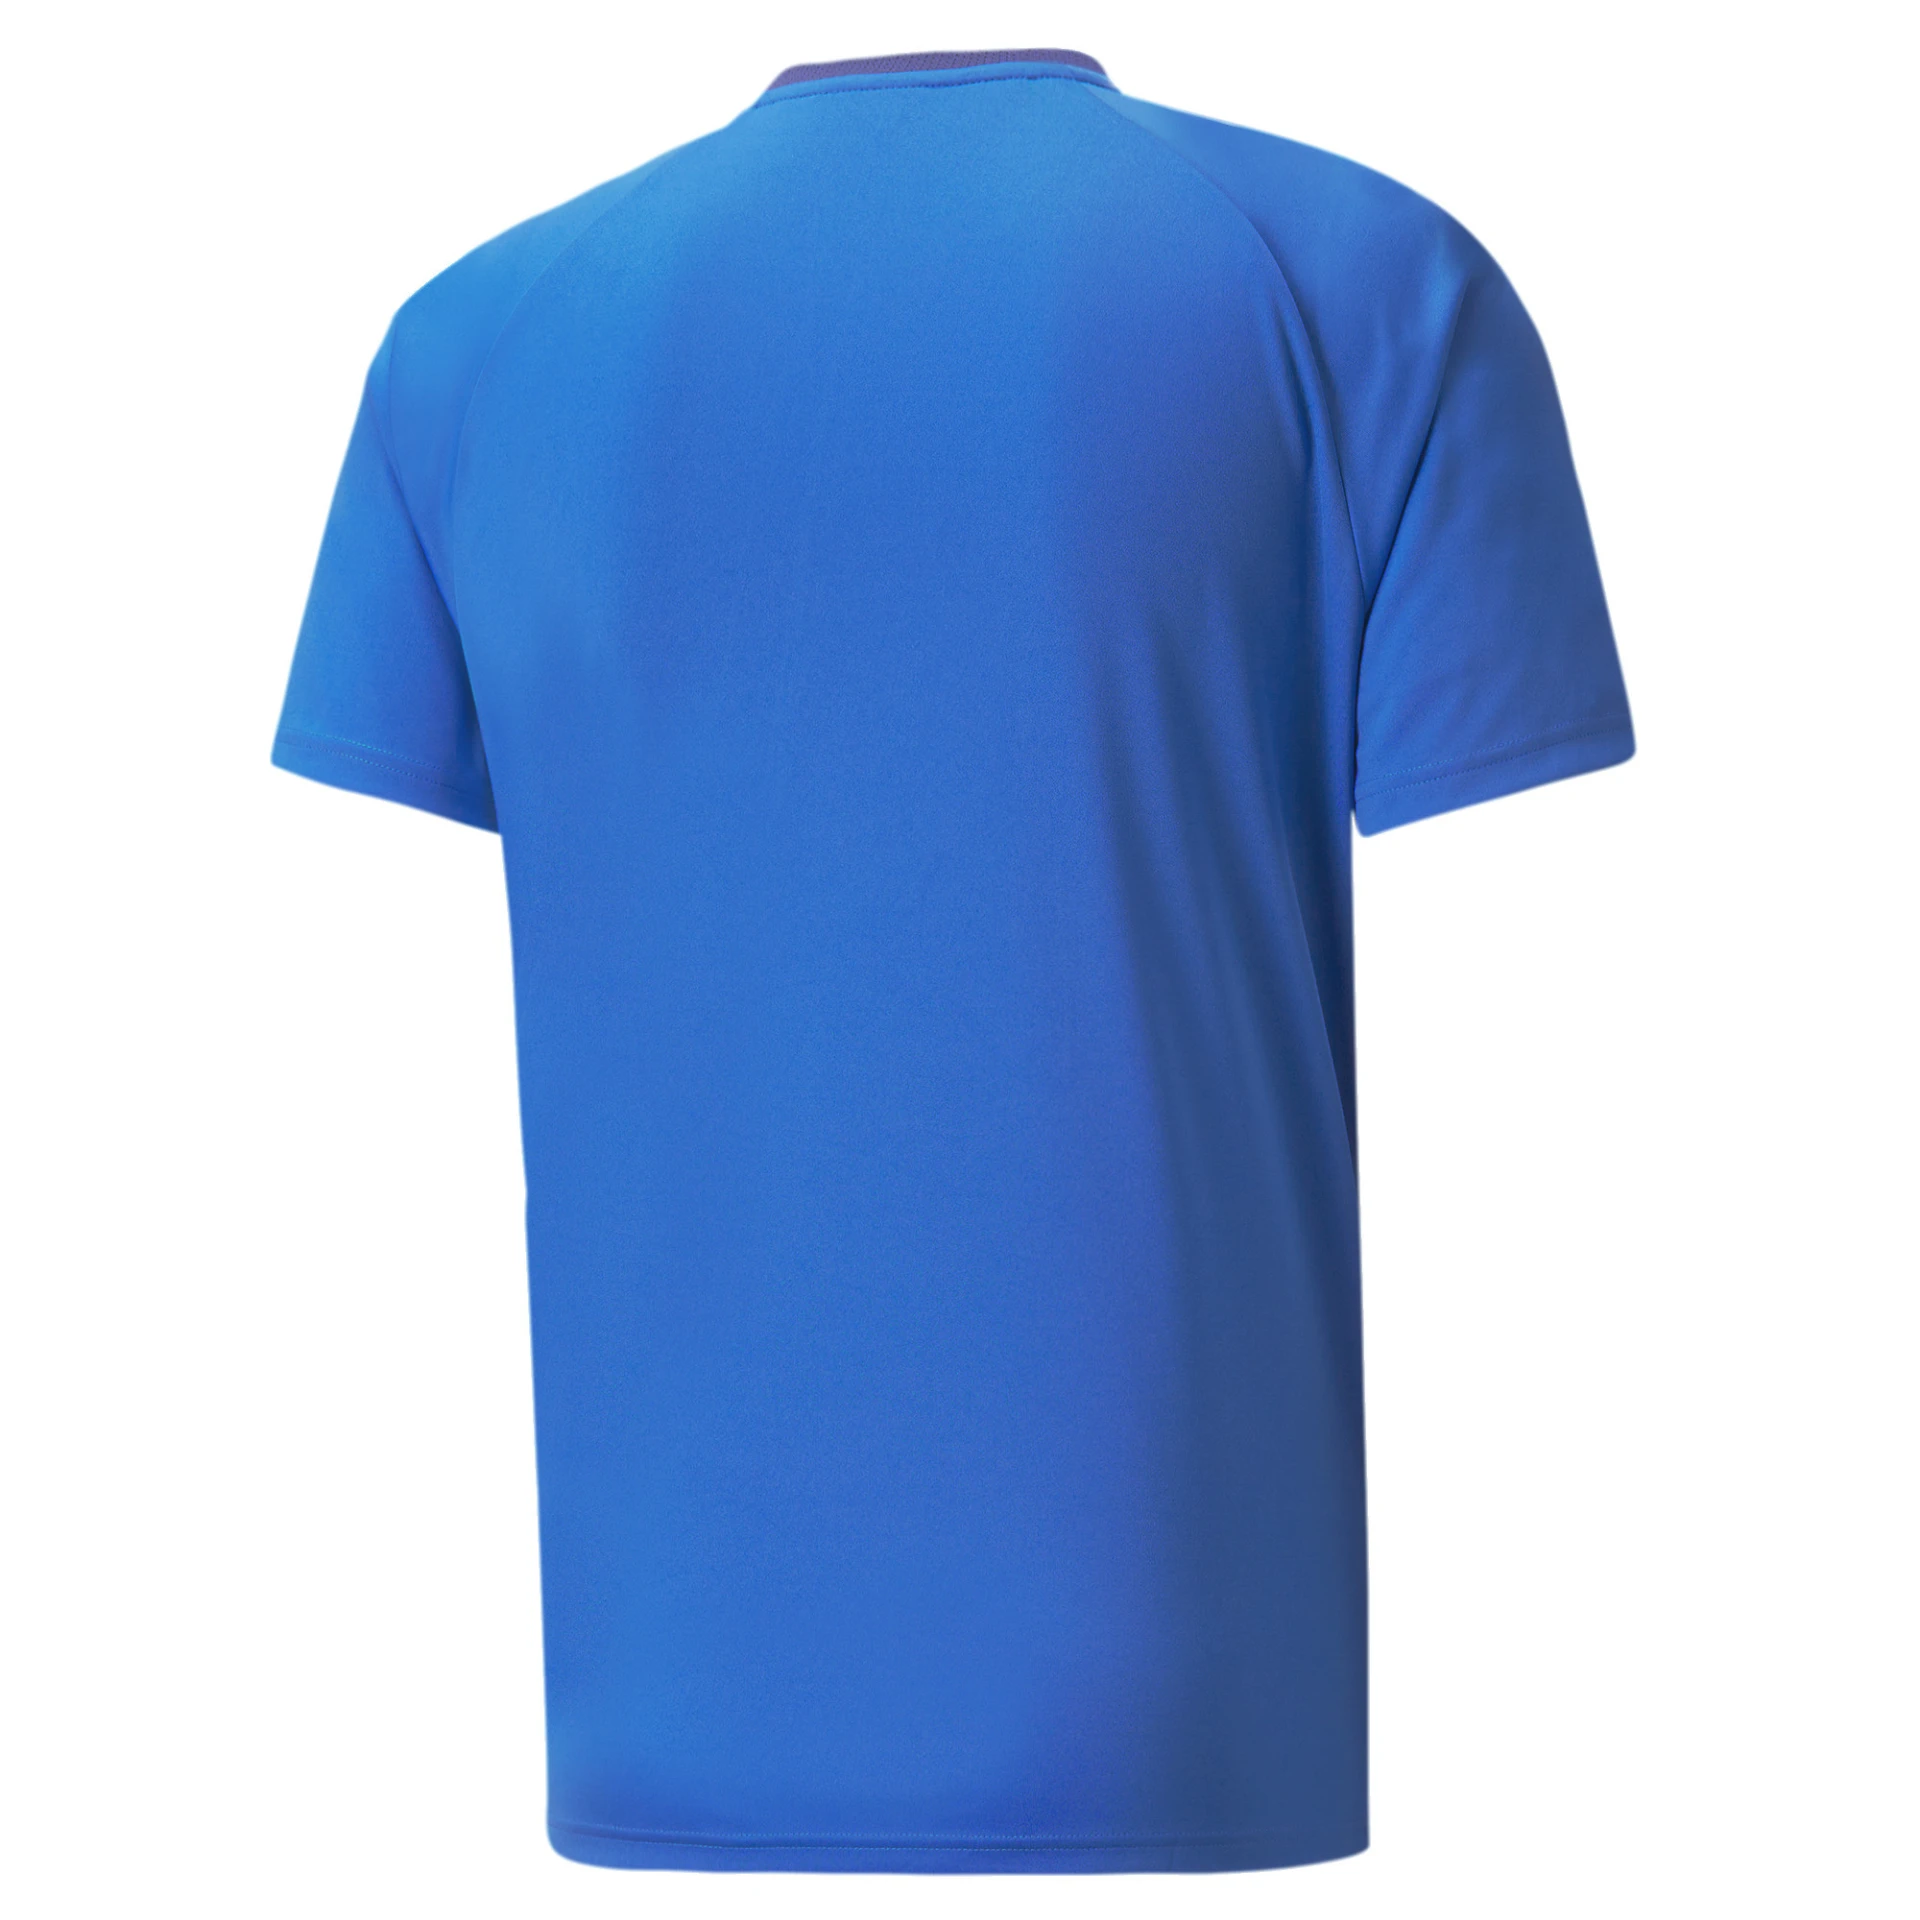 PUMA Herren_Shirt_teamVISION_Jersey A4T003704921 002 ELECTRIC BLUE LEMONADE-LIM